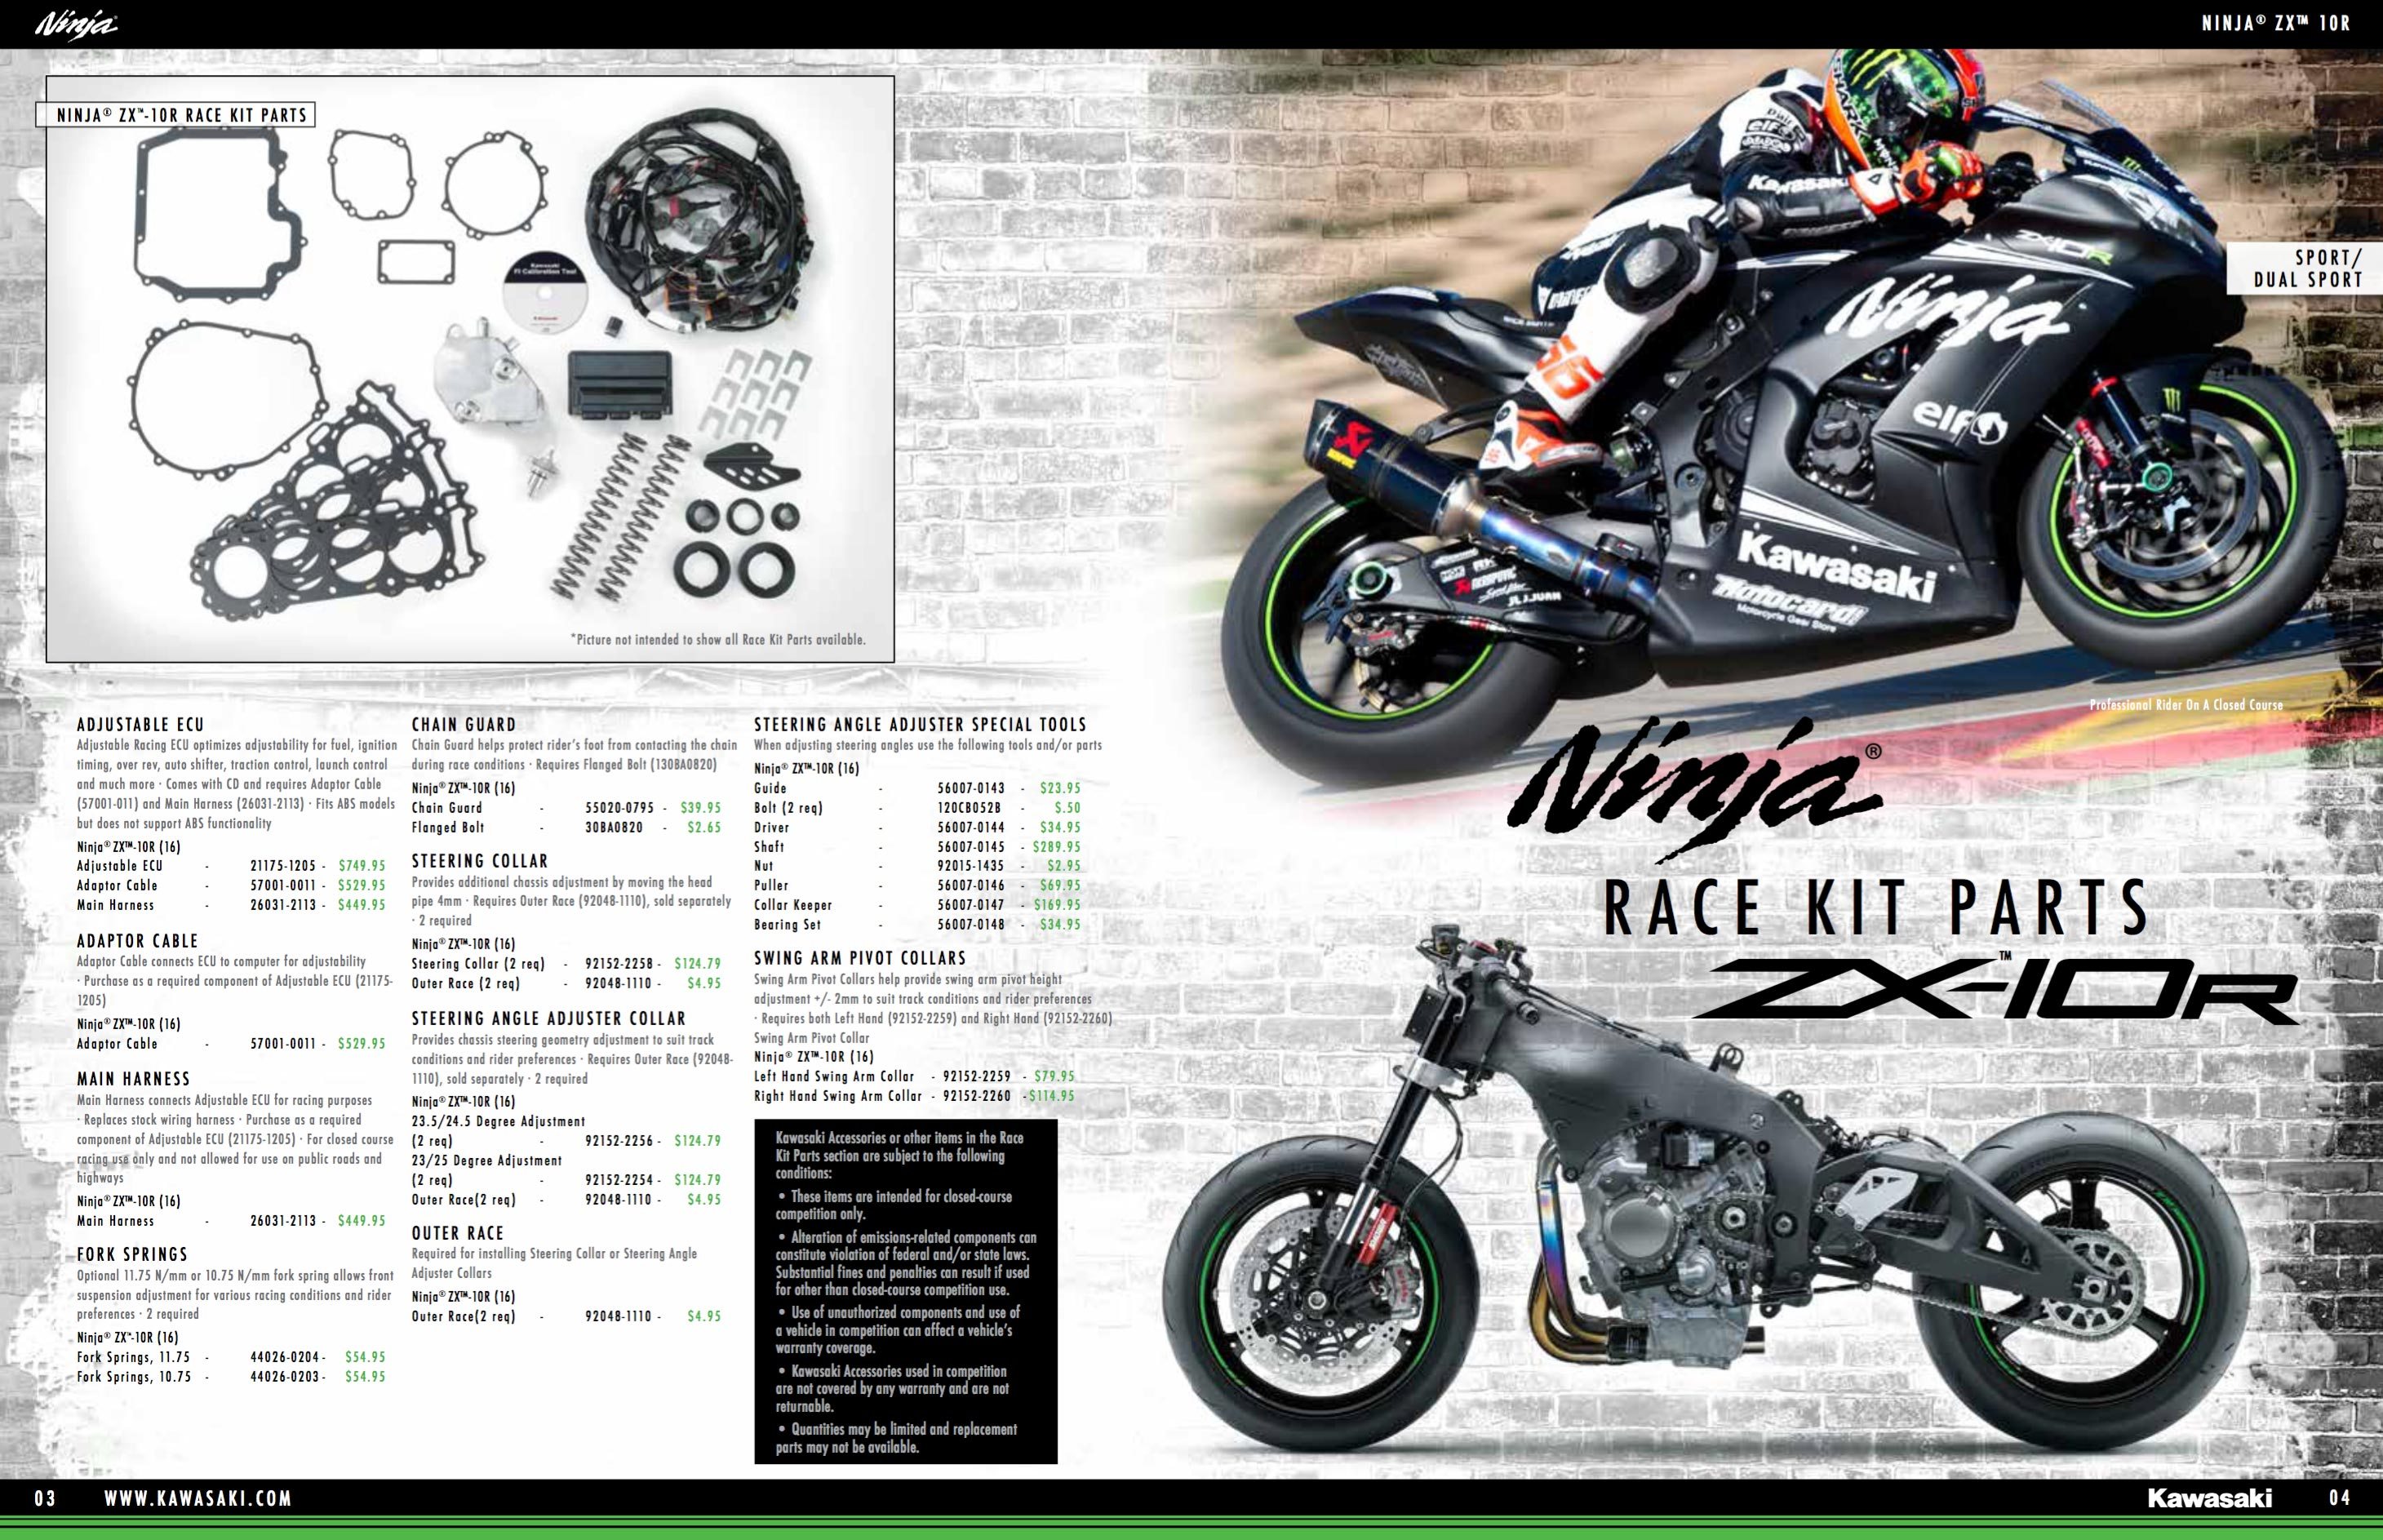 New Kawasaki Ninja racing parts catalogue released Motorcycle news, Motorcycle reviews from Malaysia, Asia and the world